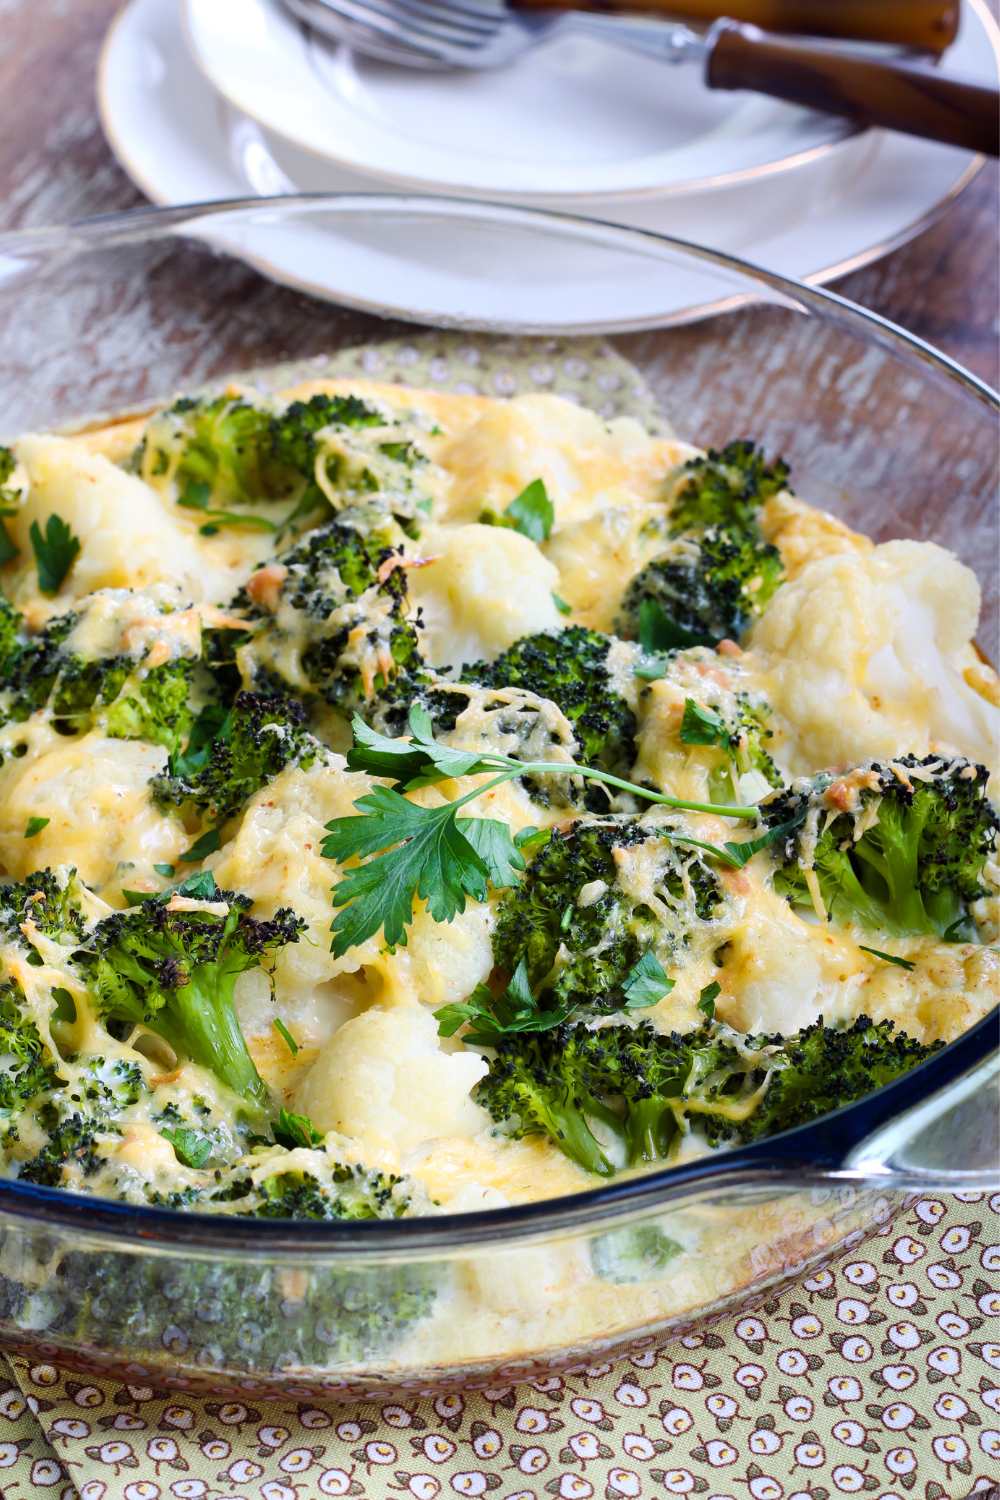 Recipes With Broccoli And Cauliflower